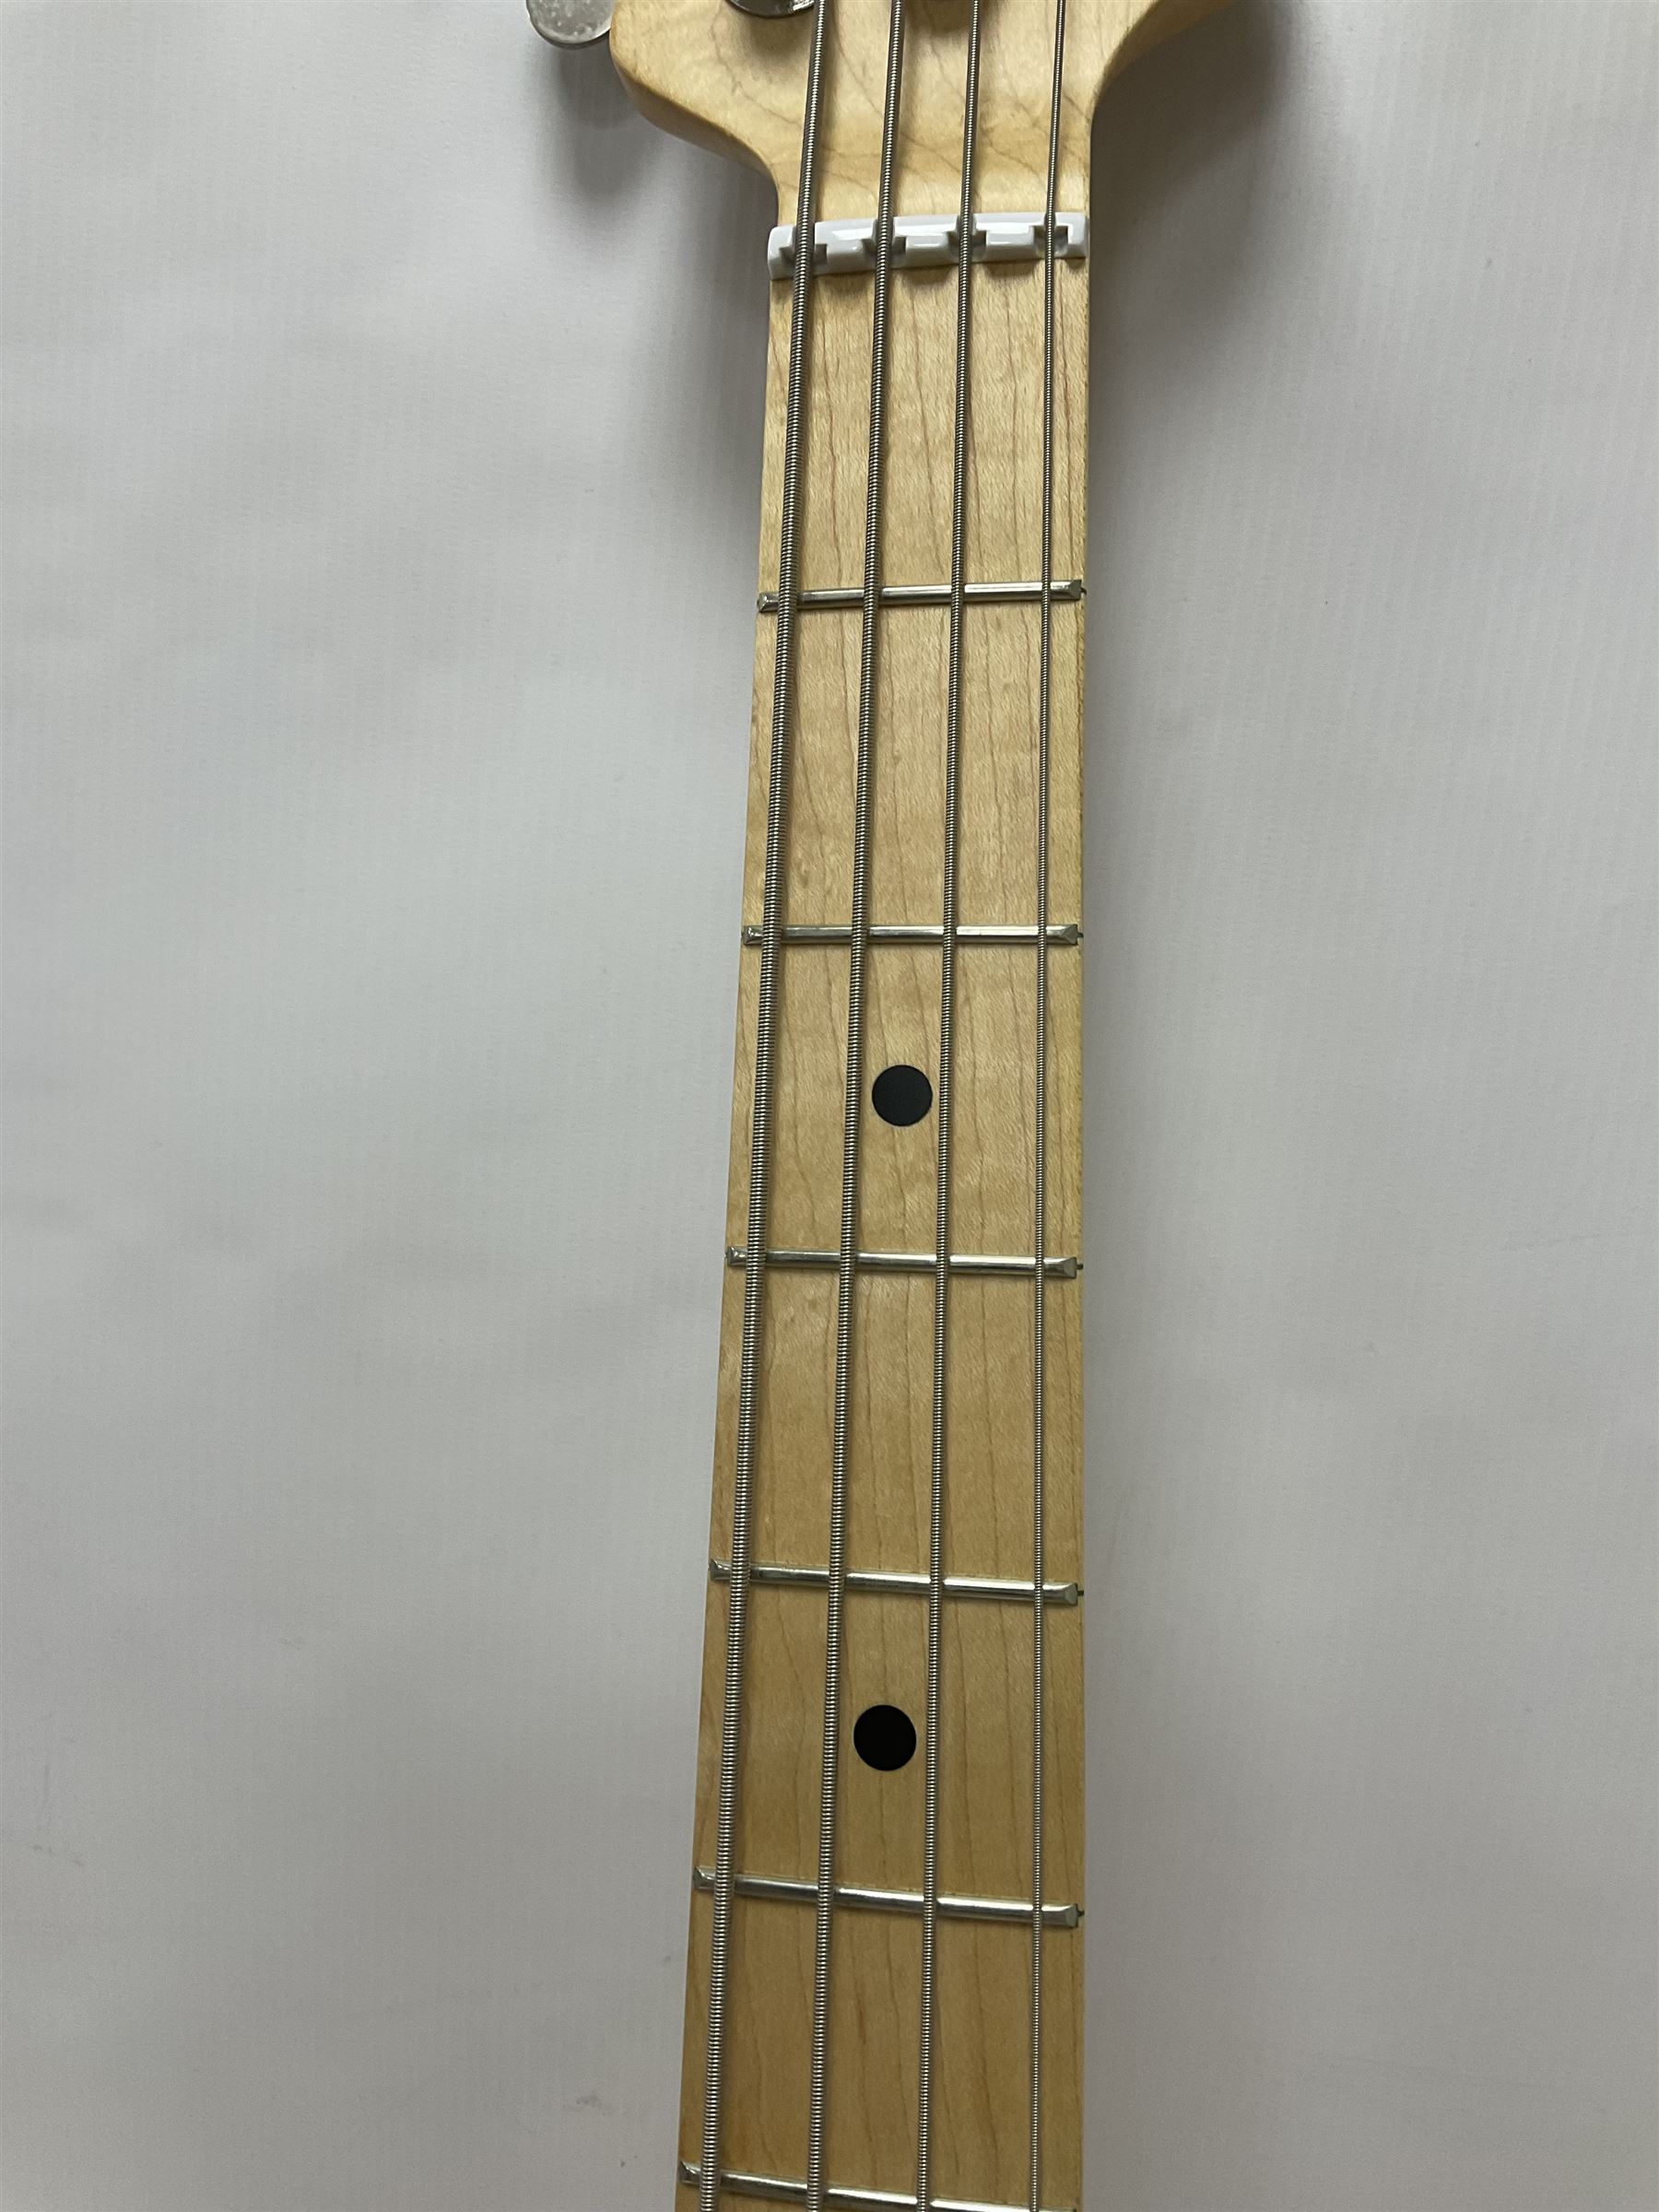 Ernie Ball Music Man Sting Ray 4 string bass guitar - Image 14 of 24